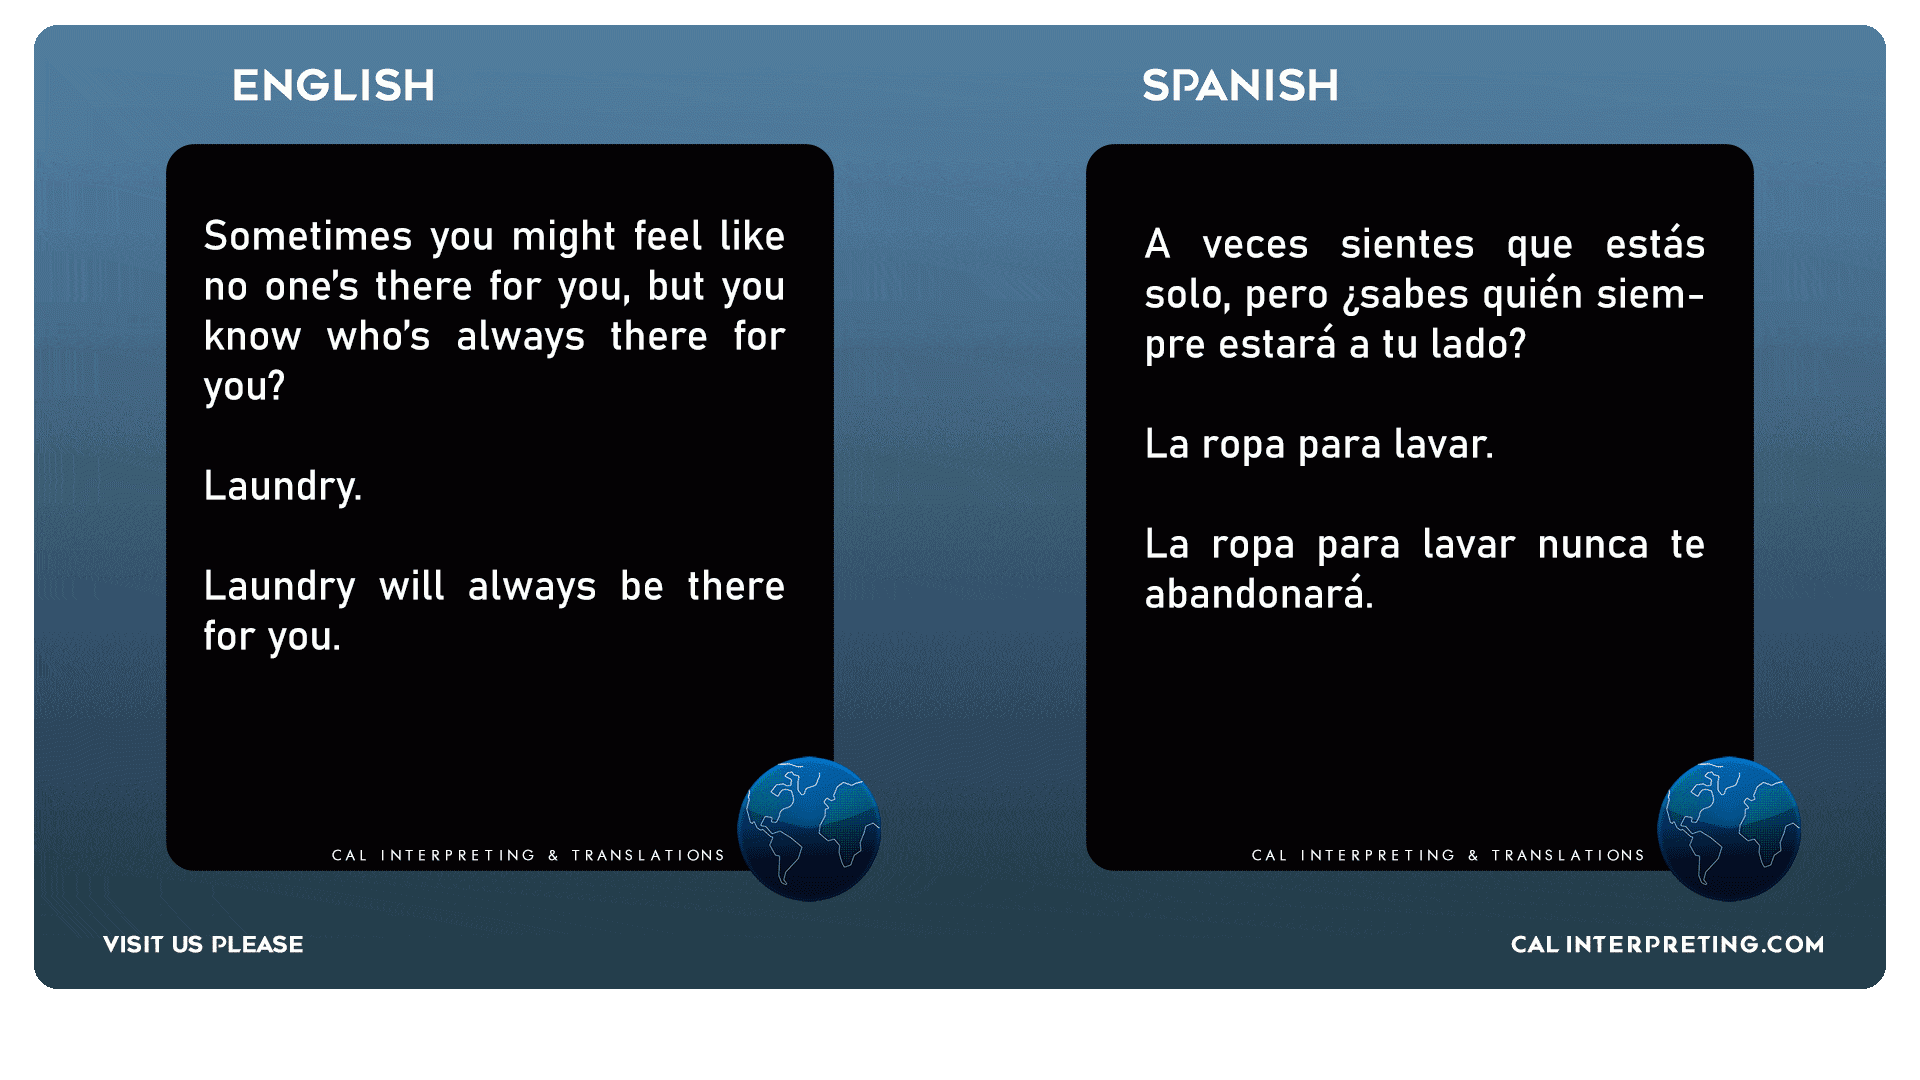 English Meme and Spanish Translation side-by-side